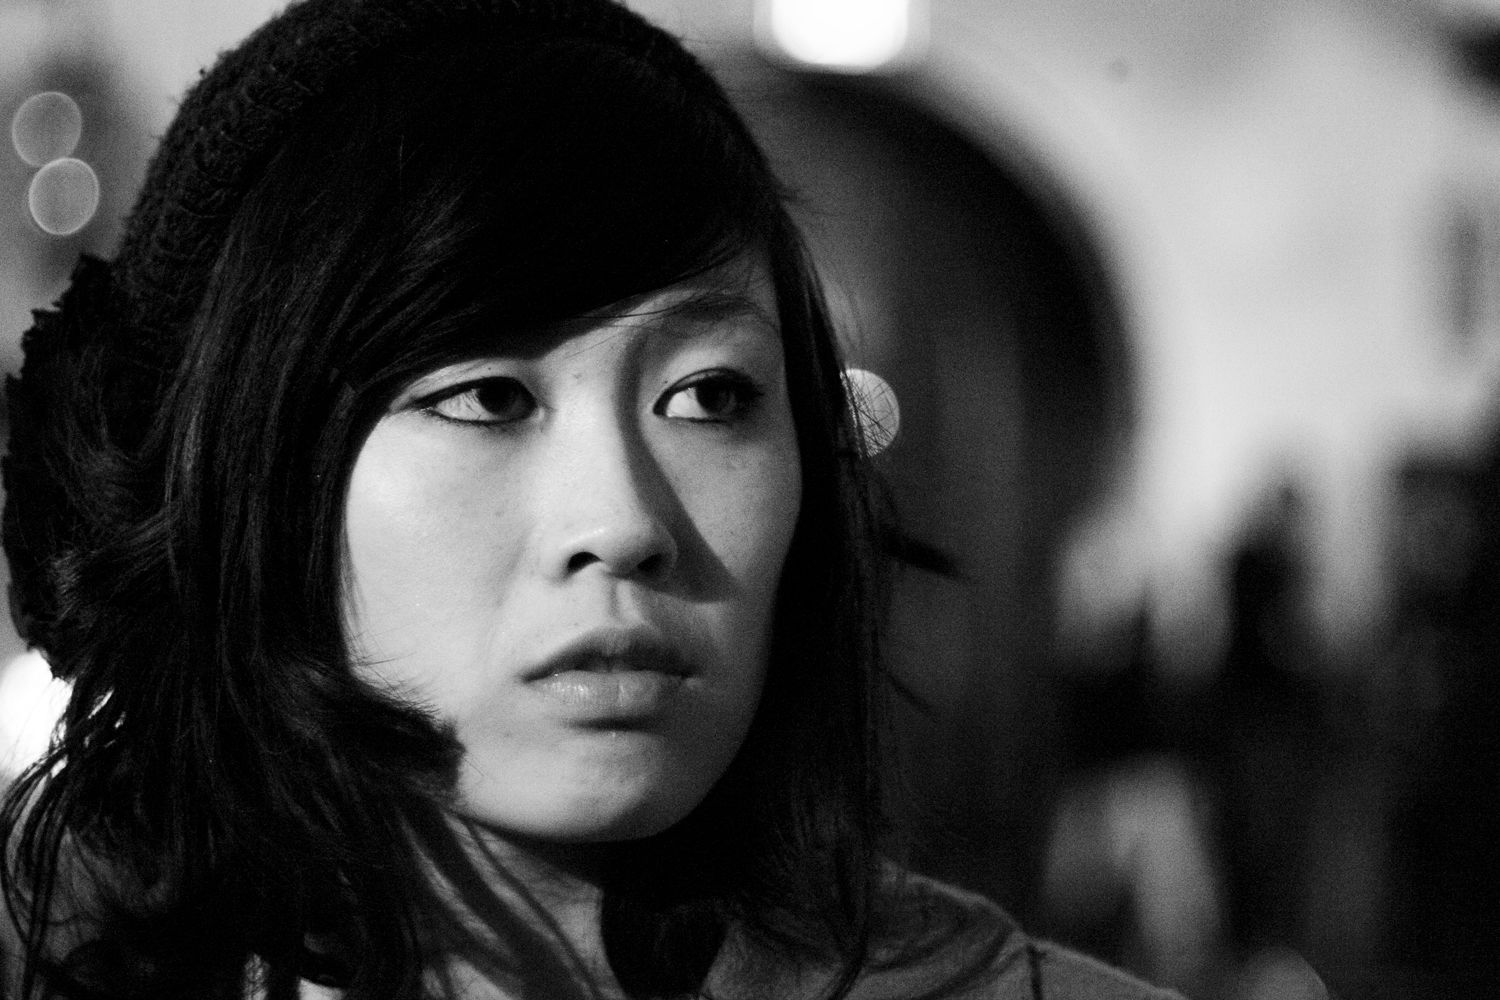 Atsuko Okatsuka at the 2010 Los Angeles premiere of Pearblossom Hwy at AFI Film Festival.